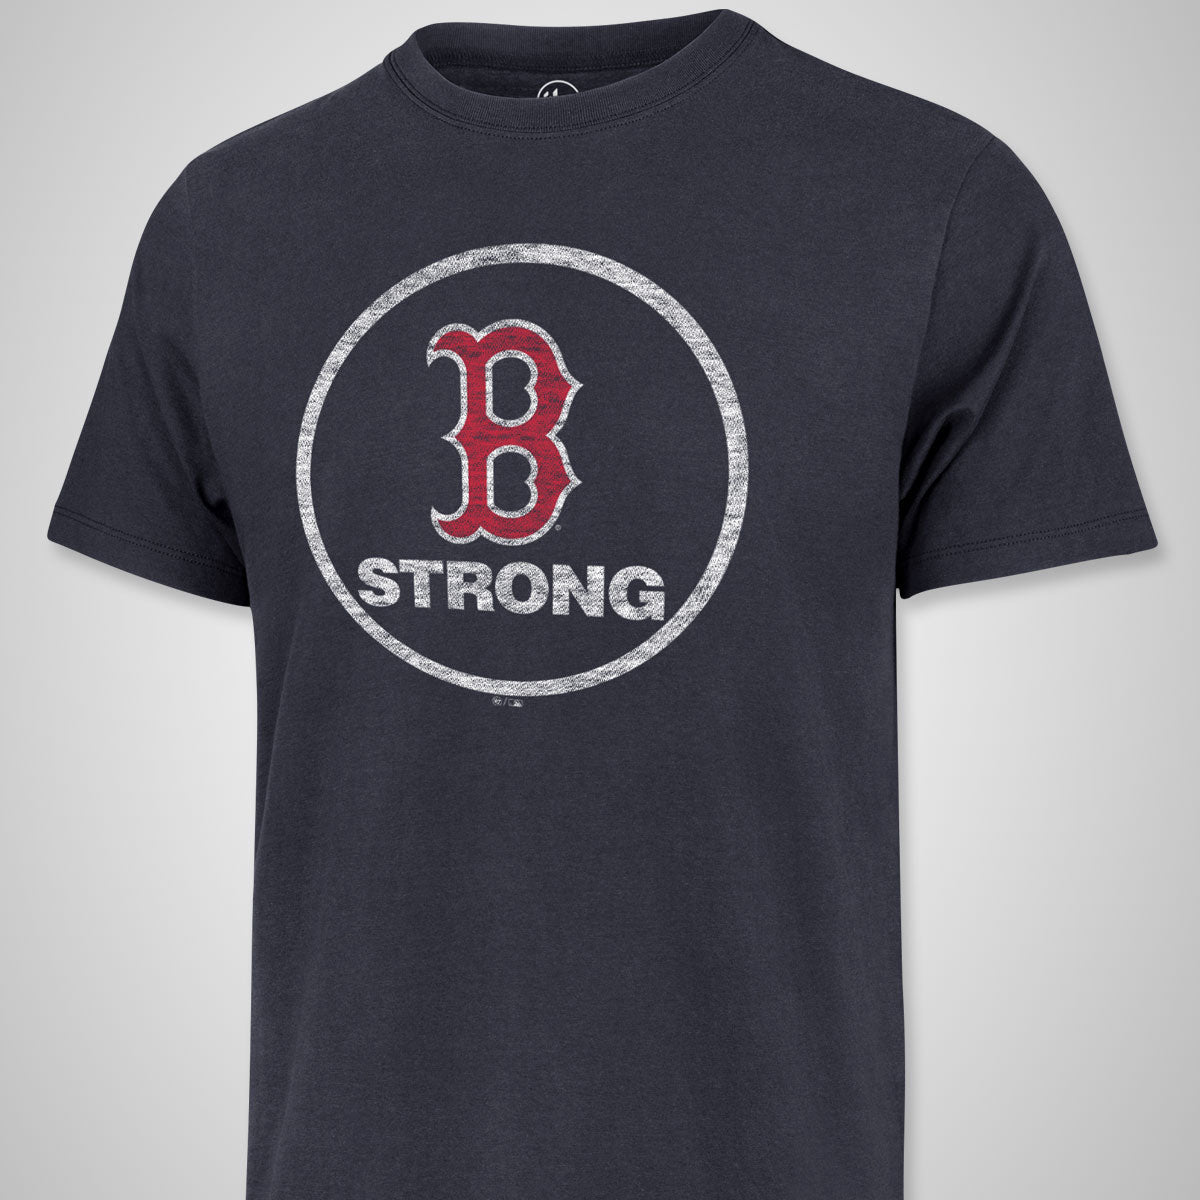 Boston Red Sox Women's Distressed Long Sleeve T-Shirt Blue